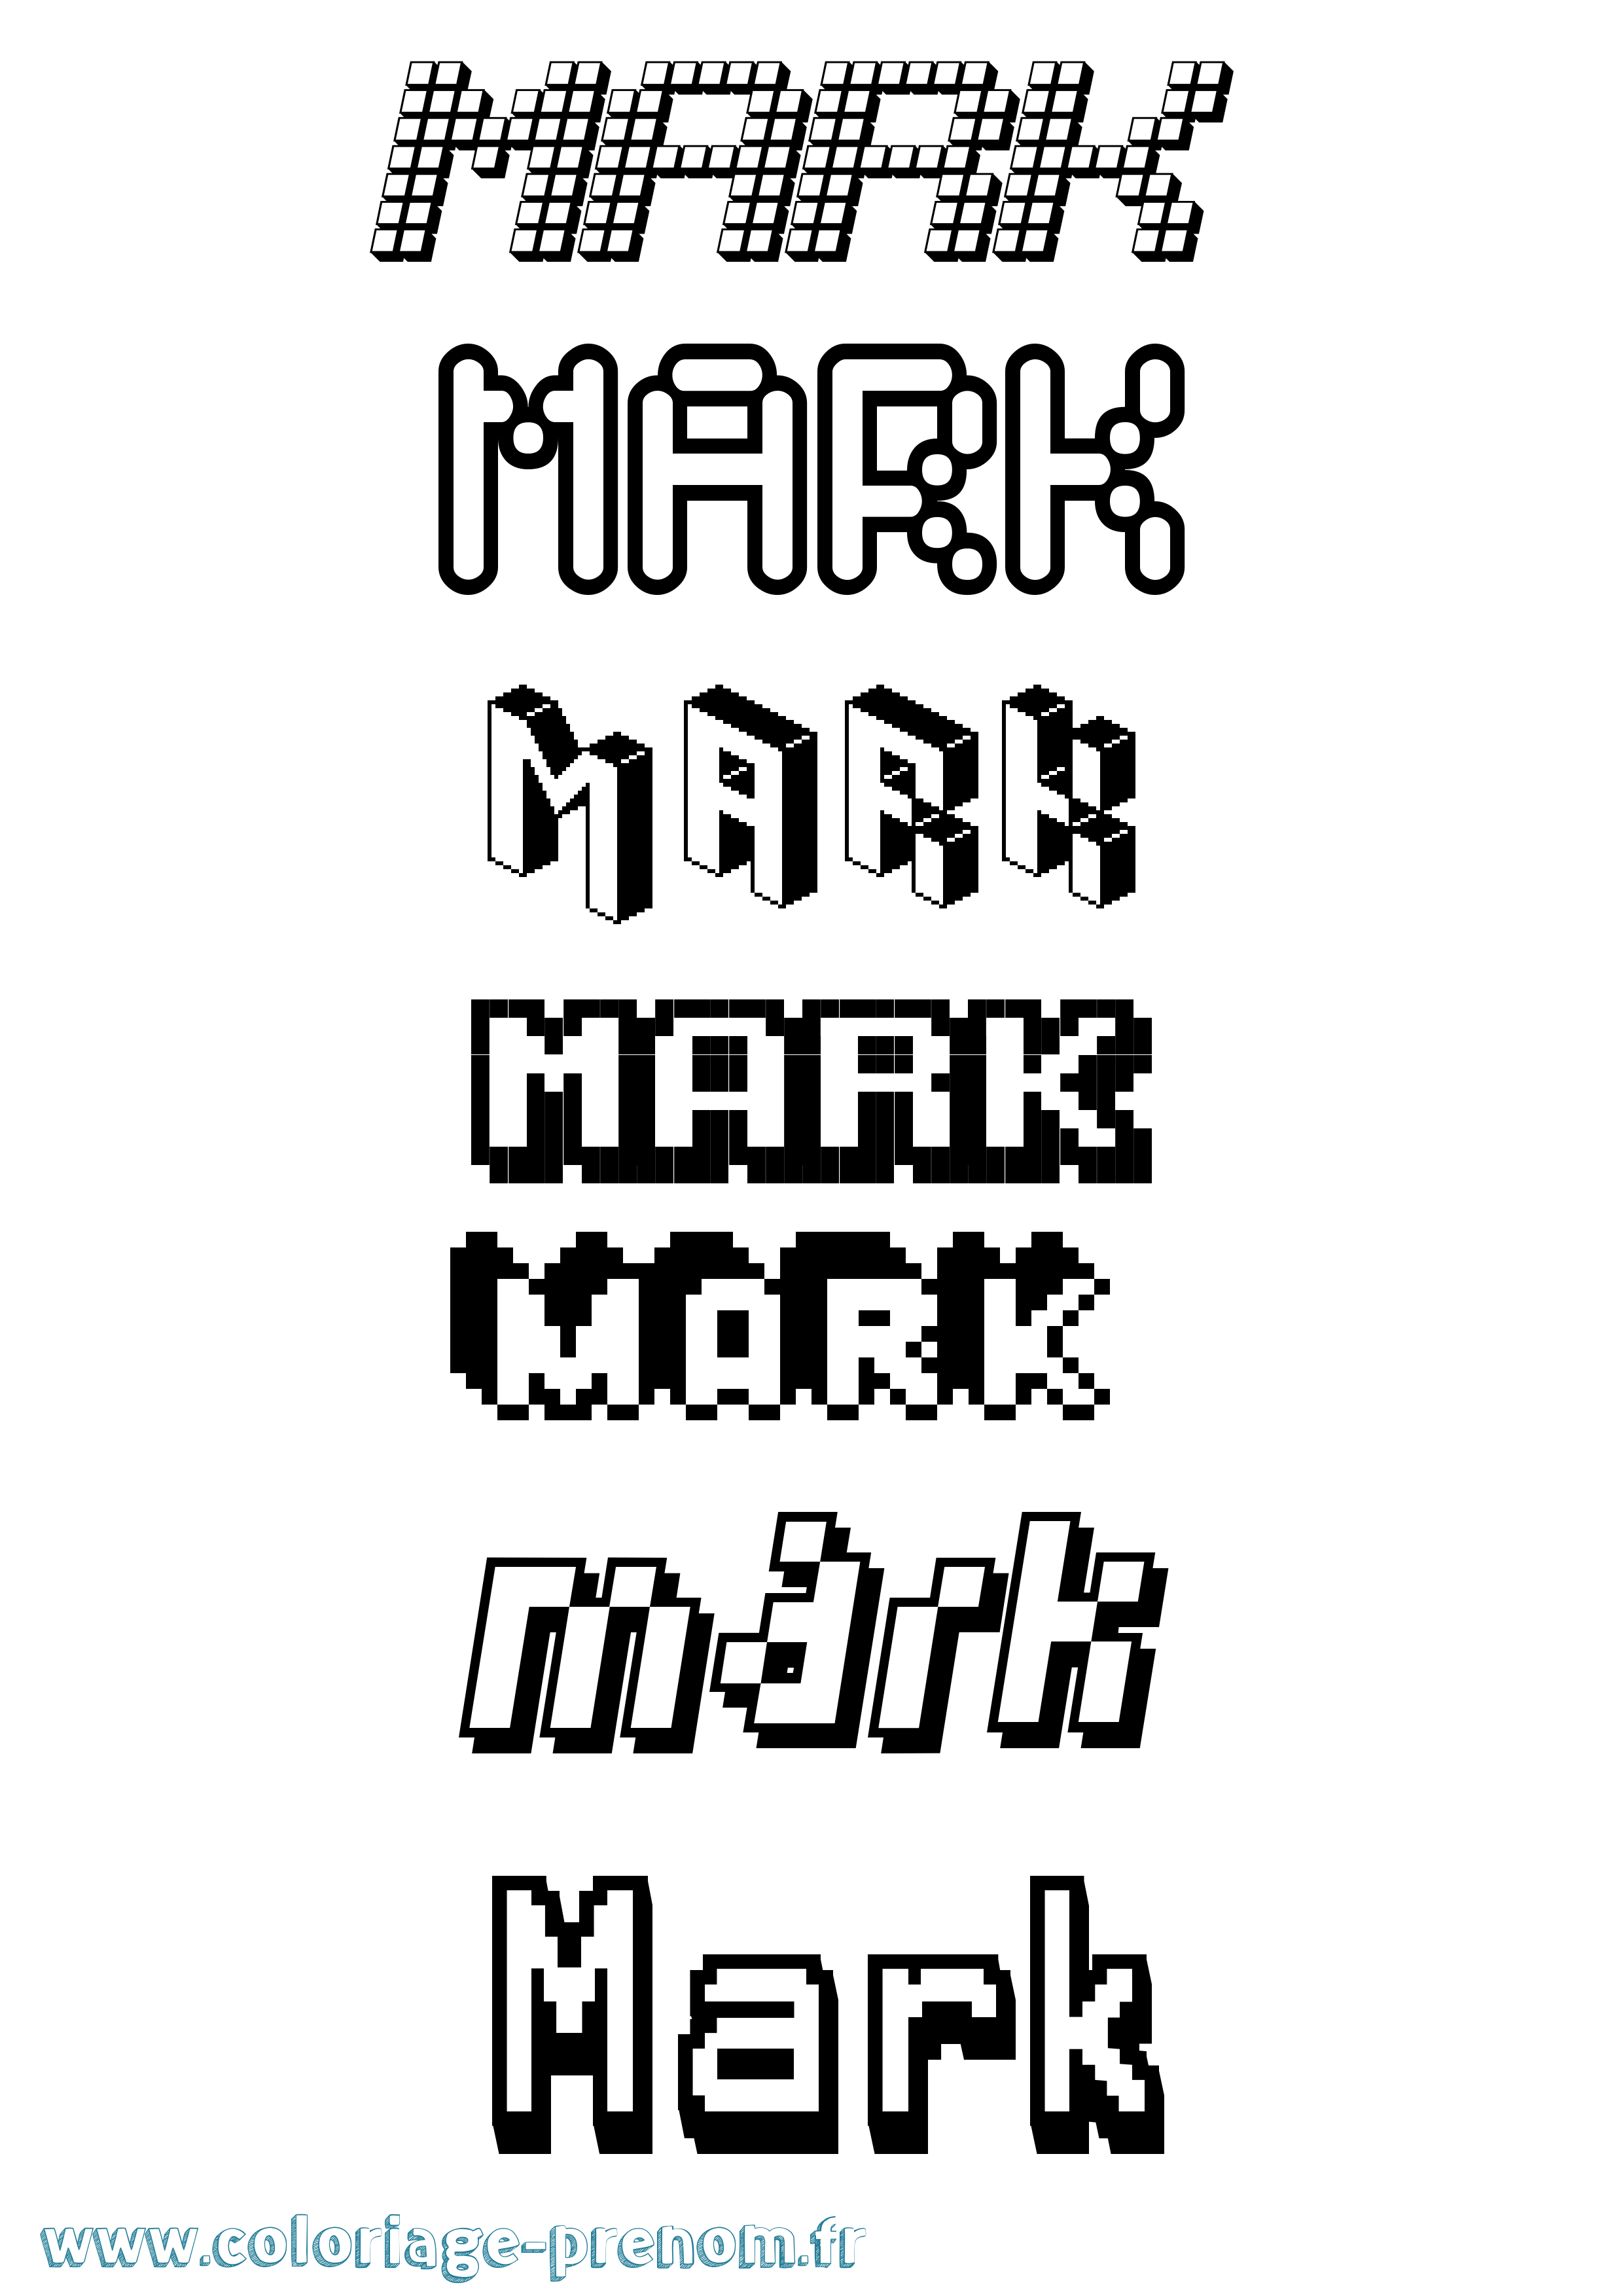 Coloriage prénom Mark Pixel